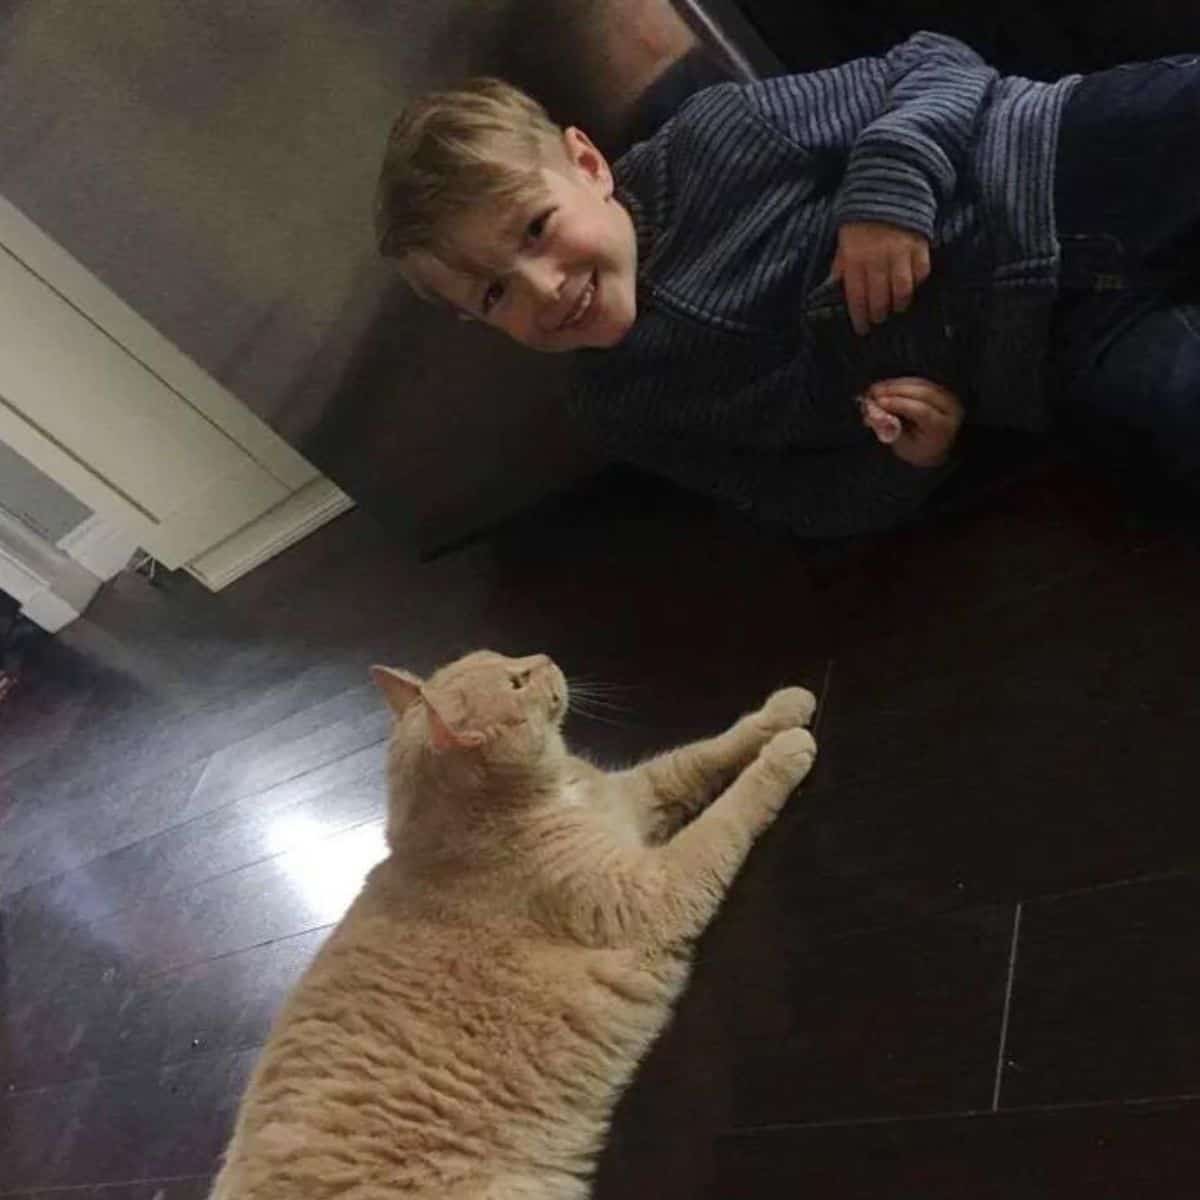 a smiling boy feeds a cat